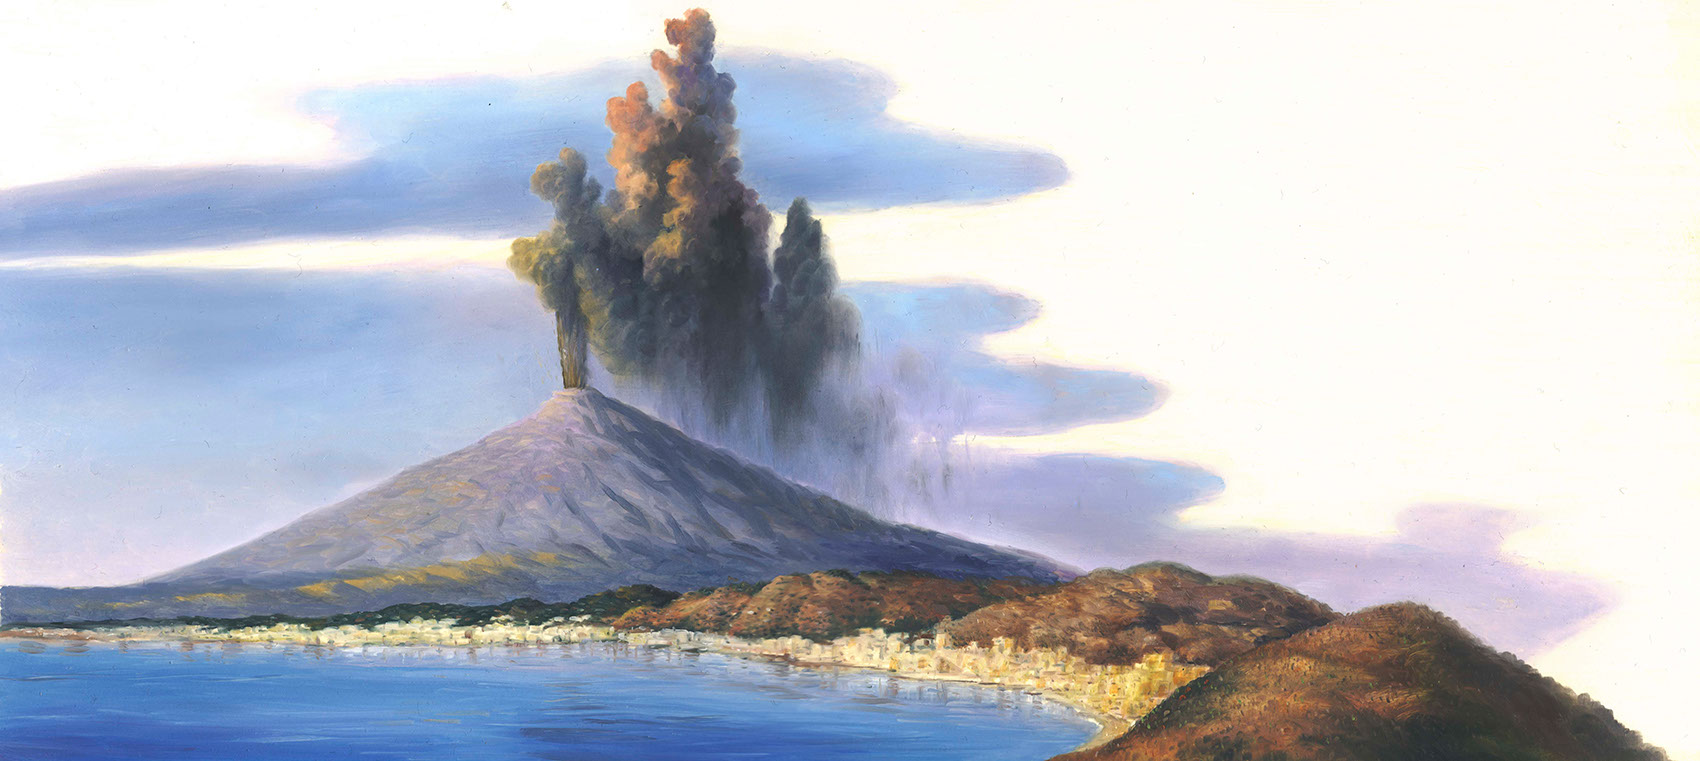 illustration-Landscapes_Smoking volcano-Mike Jaroszko